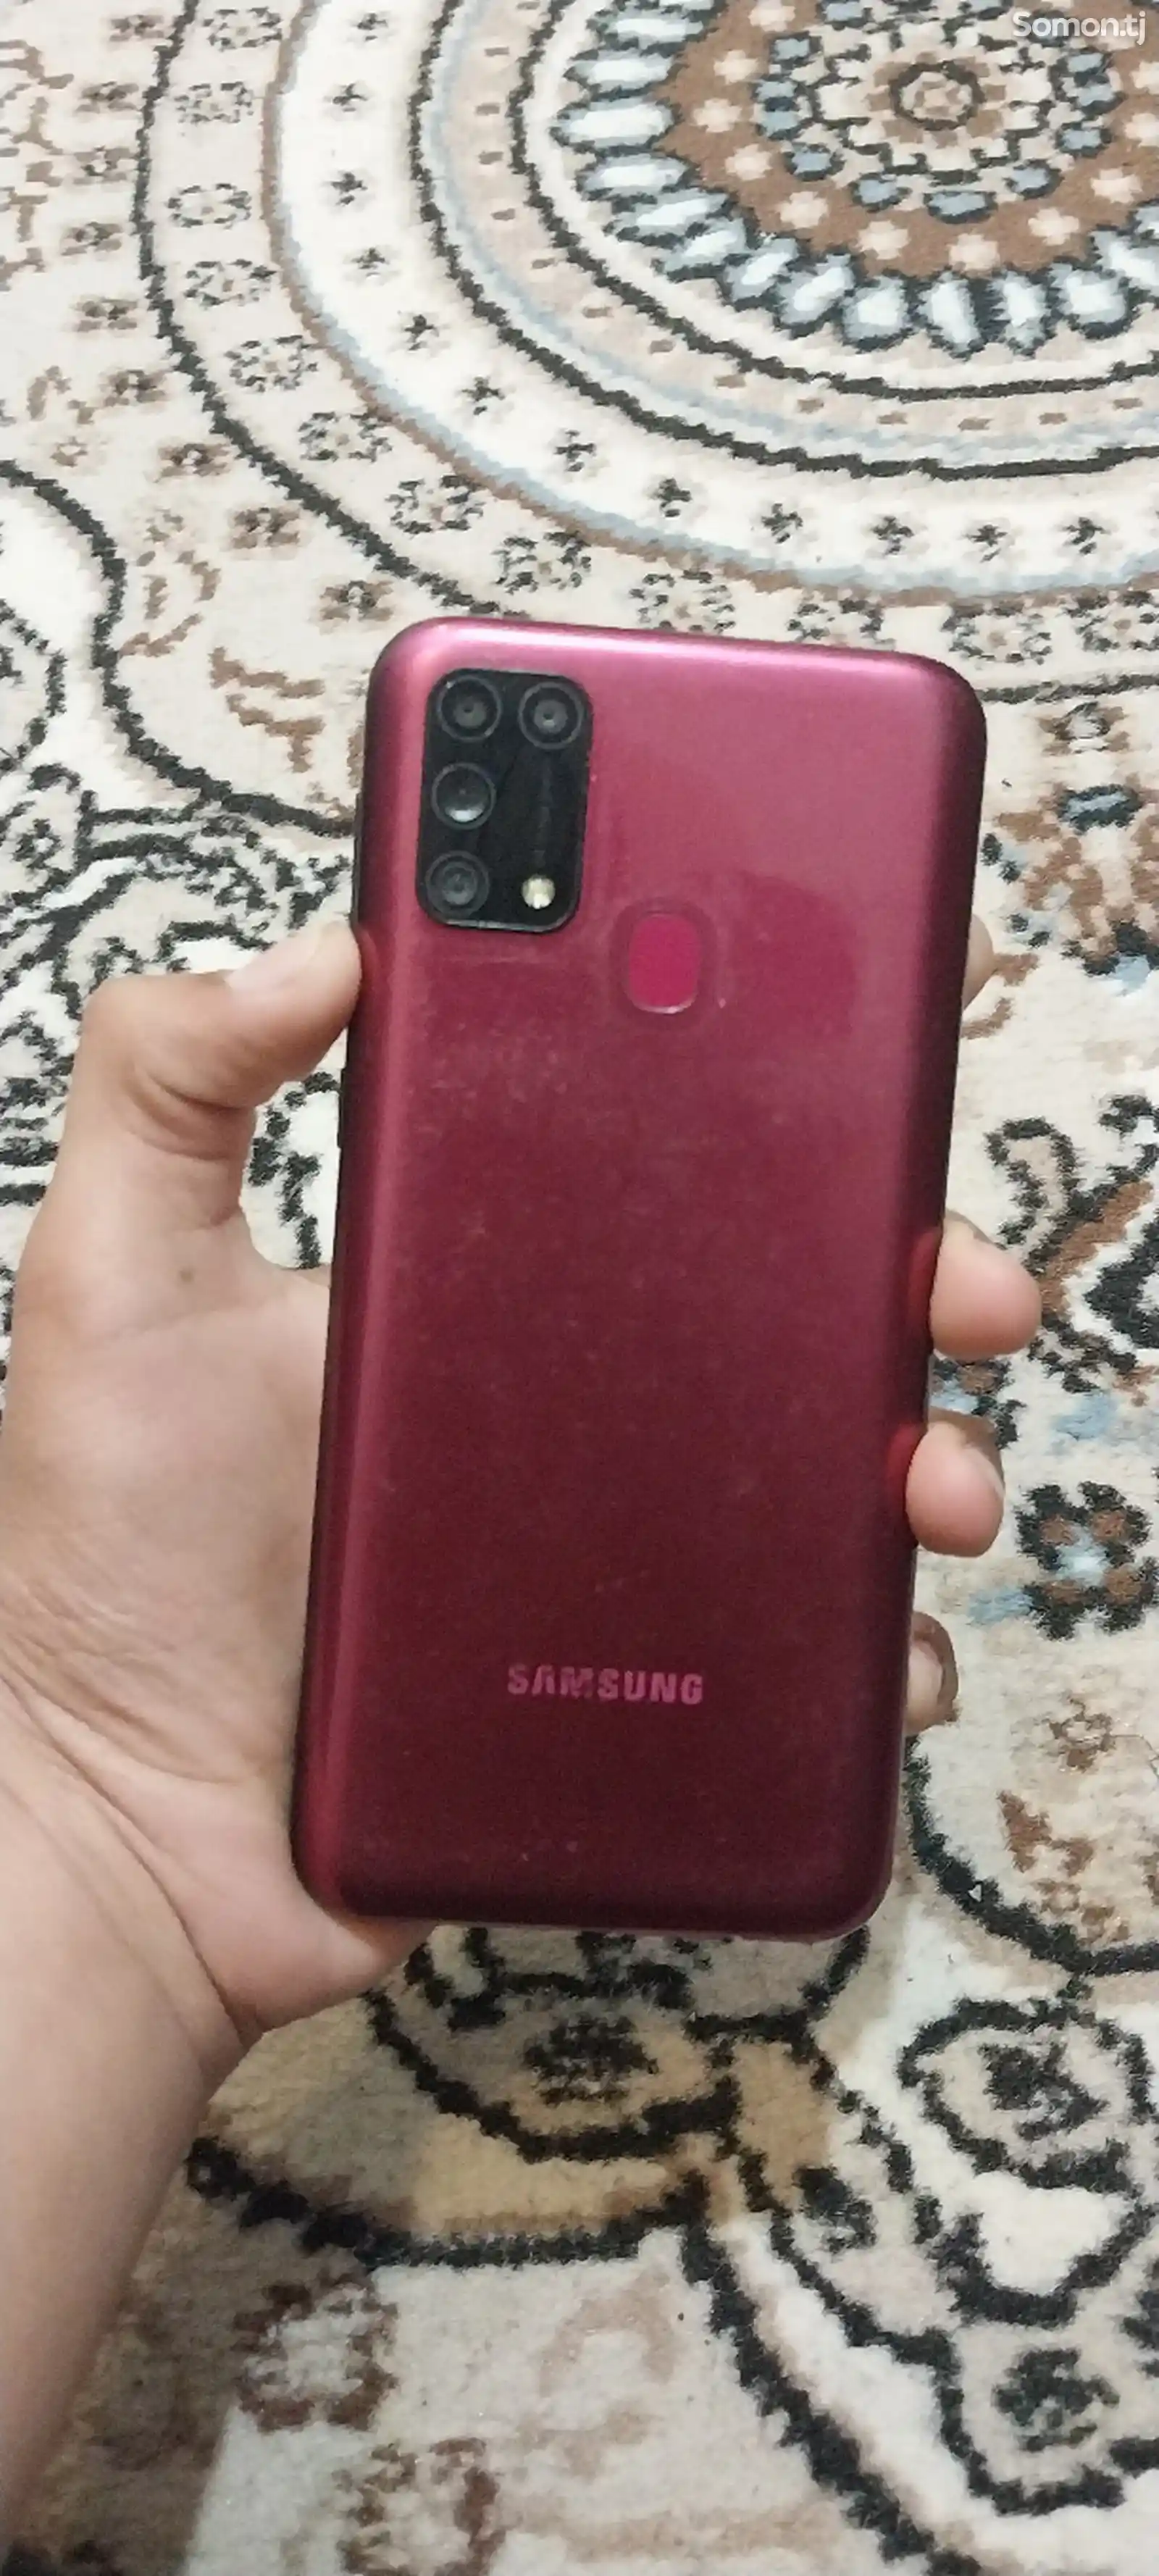 Samsung Galaxy M31-2